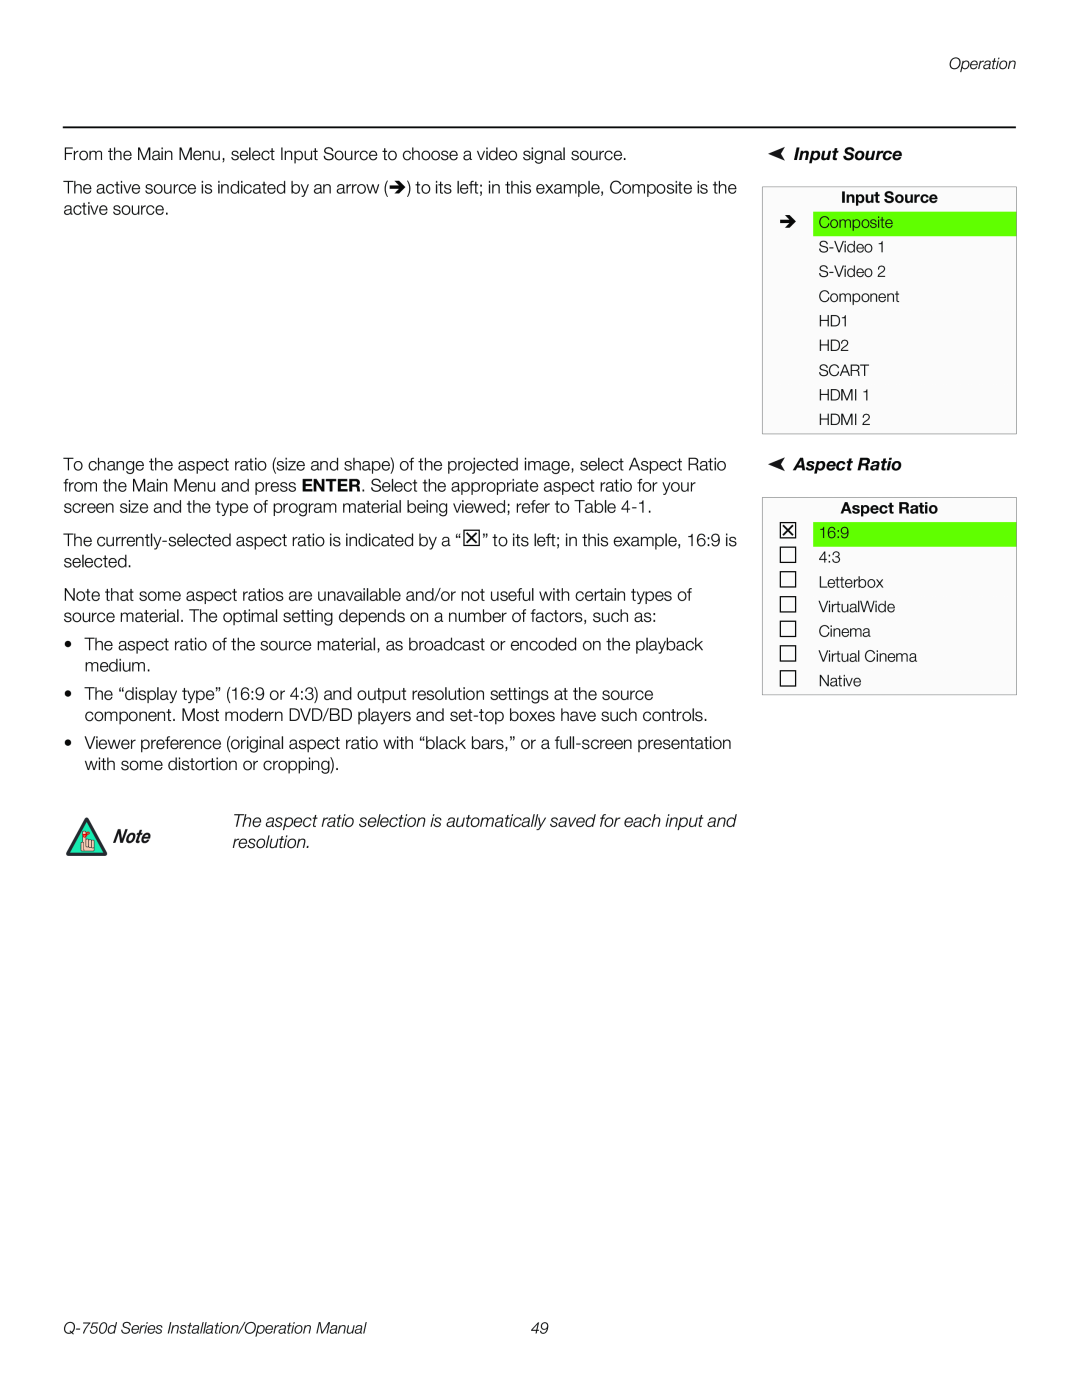 Runco Q-750D operation manual Input Source, Note resolution, Aspect Ratio 